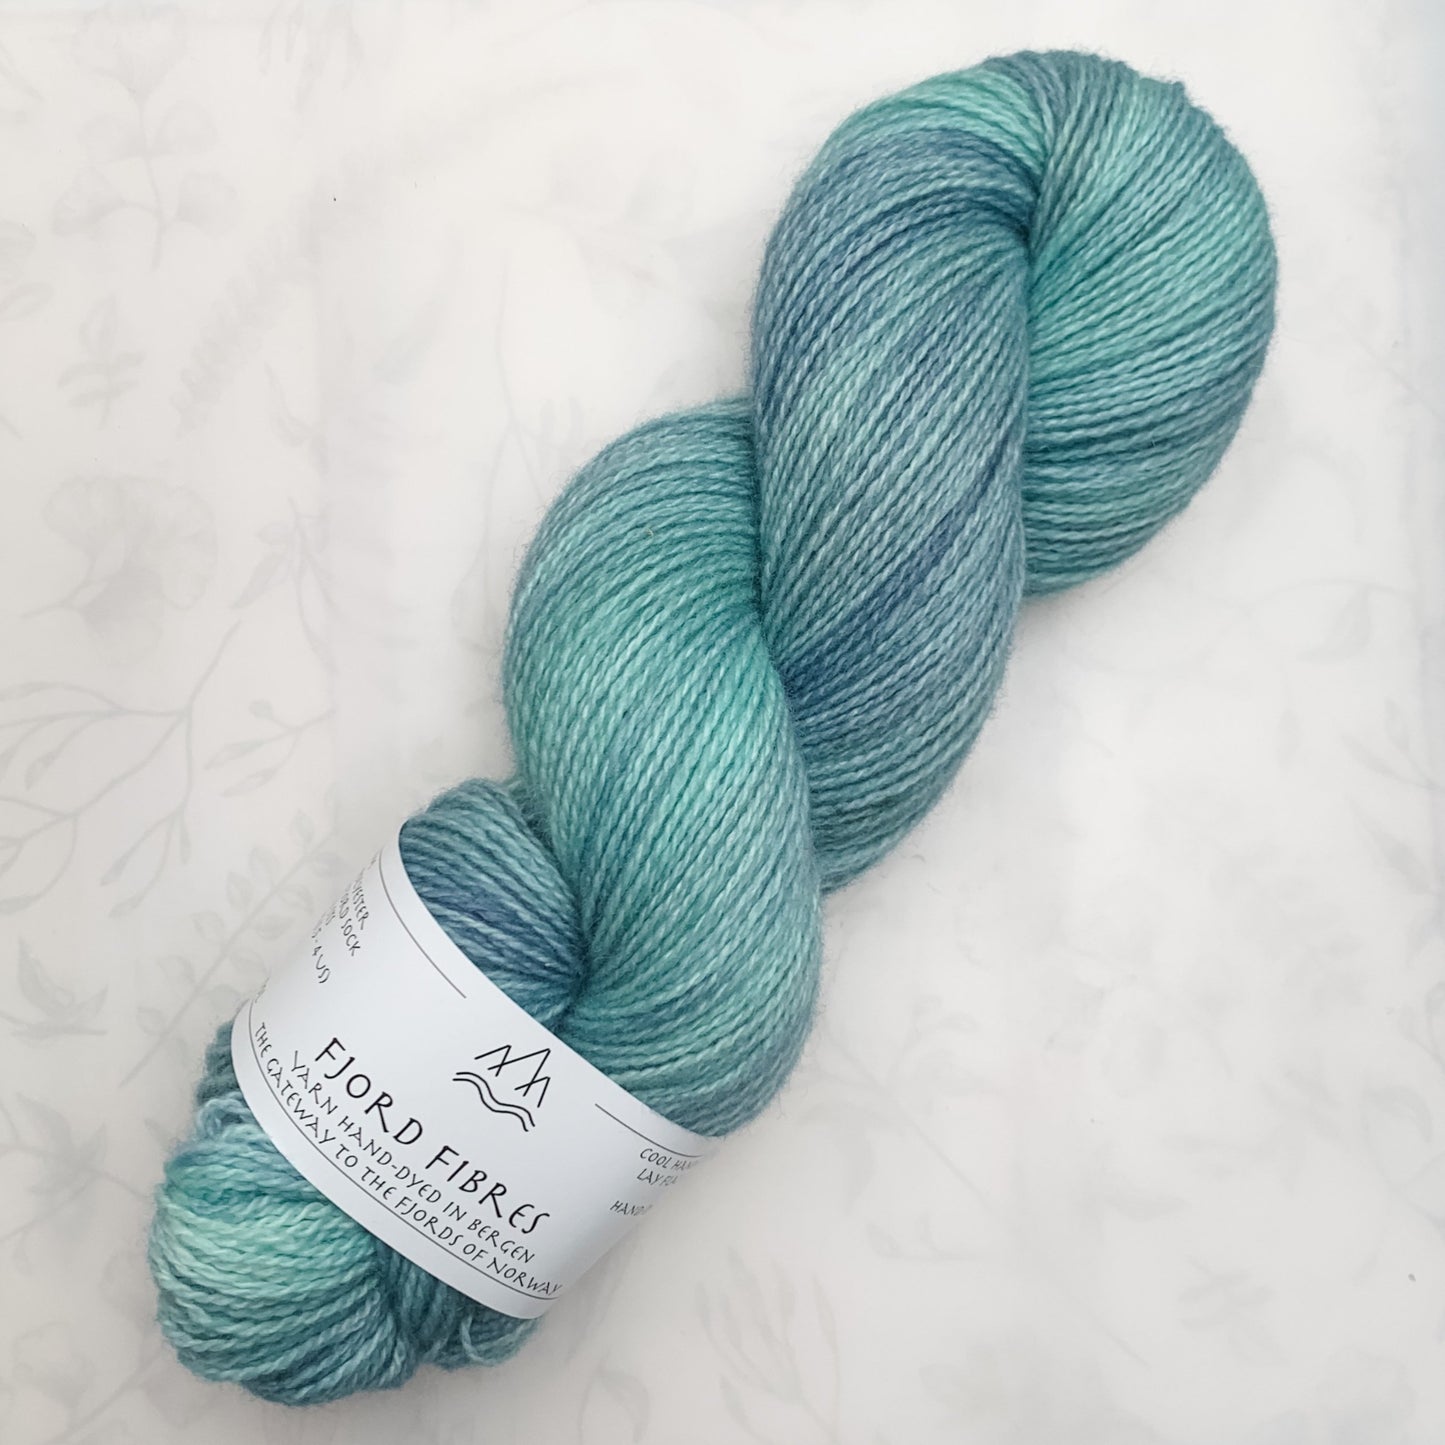 Tranquil Sea - Trollfjord sock - Variagated Yarn - Hand dyed yarn